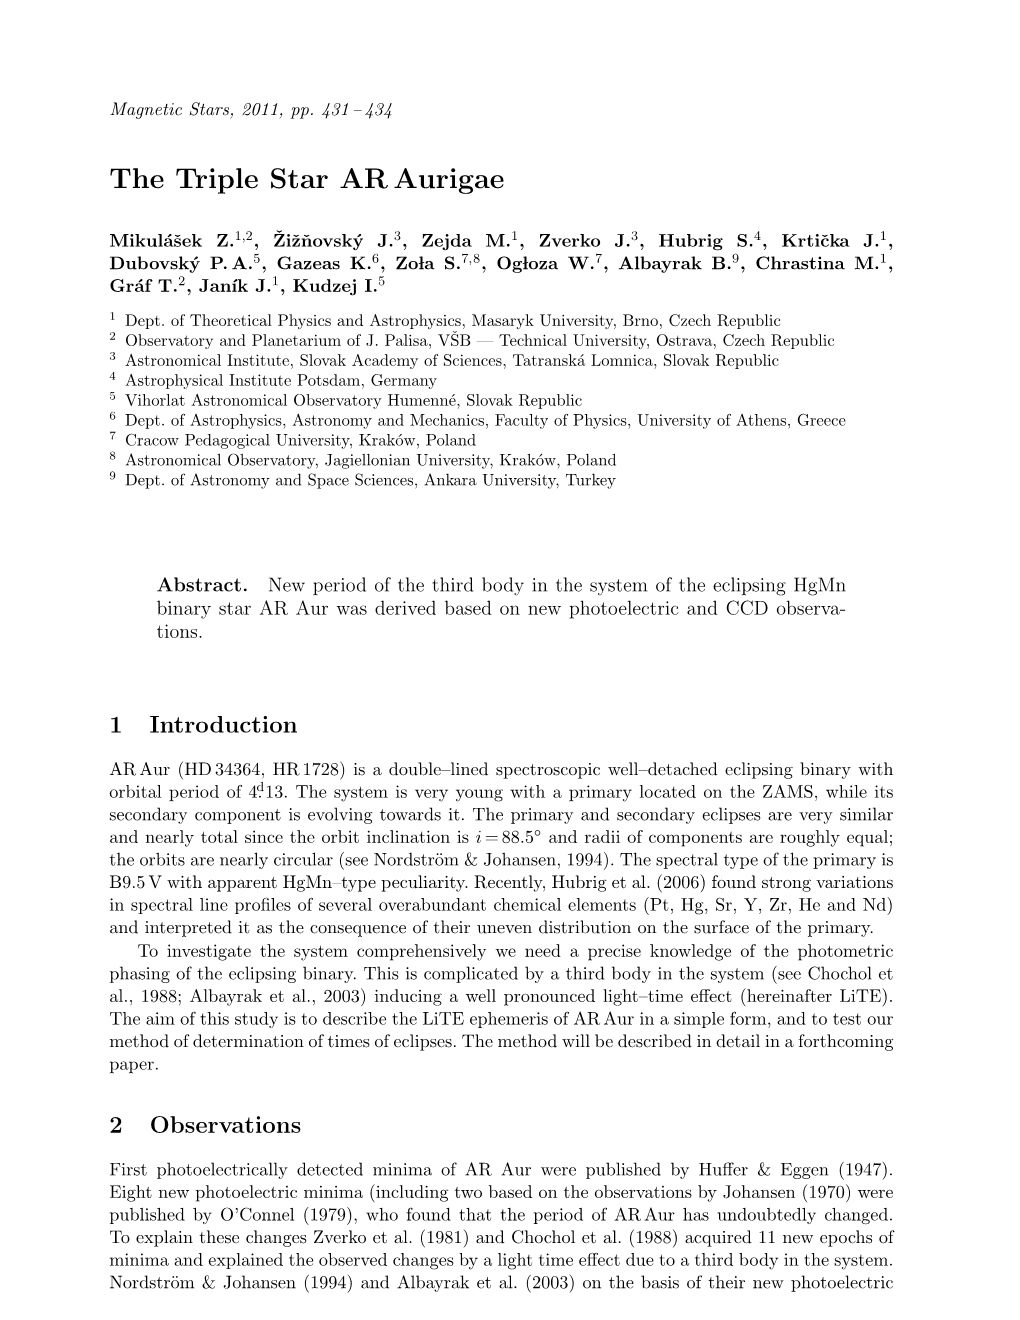 The Triple Star AR Aurigae